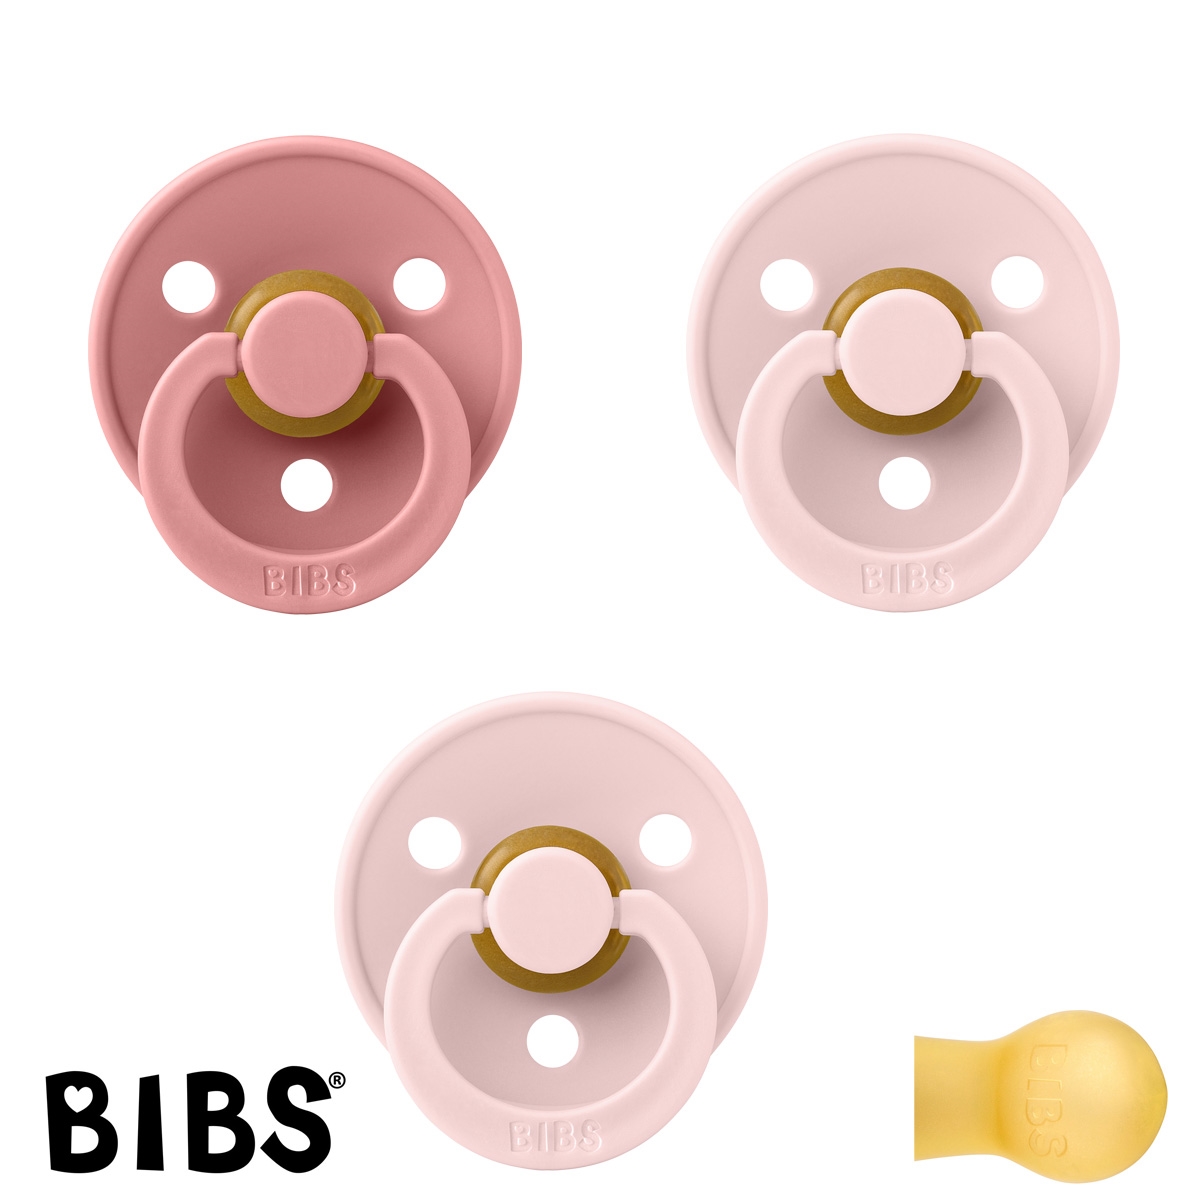 BIBS Colour Sutter med navn str 1, 1 Dusty Pink, 2 Blossom, Runde latex, Pakke med 3 sutter